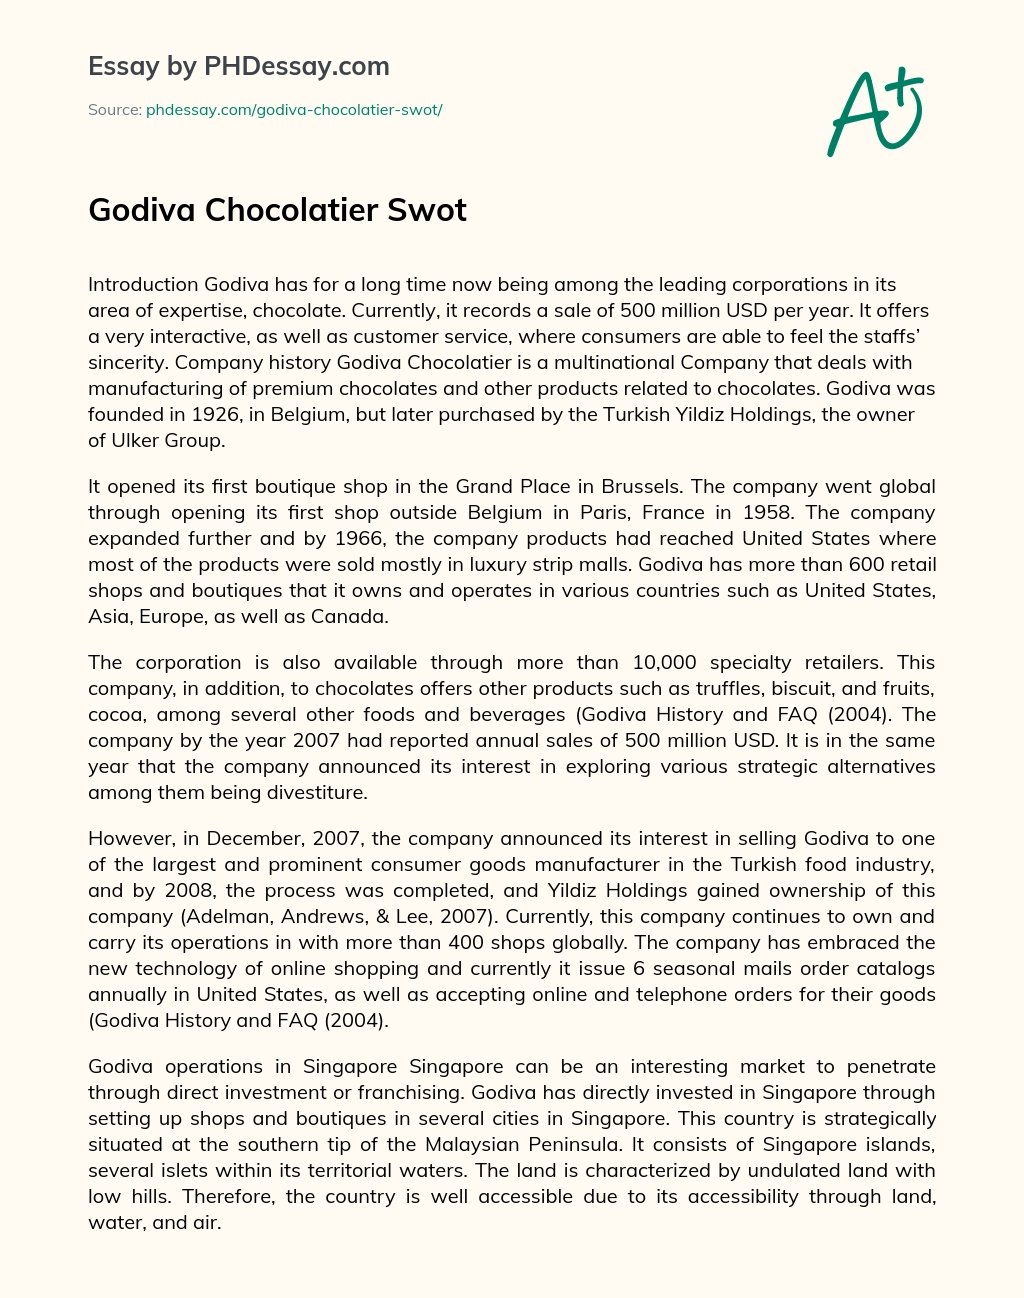 Godiva Chocolatier Swot essay